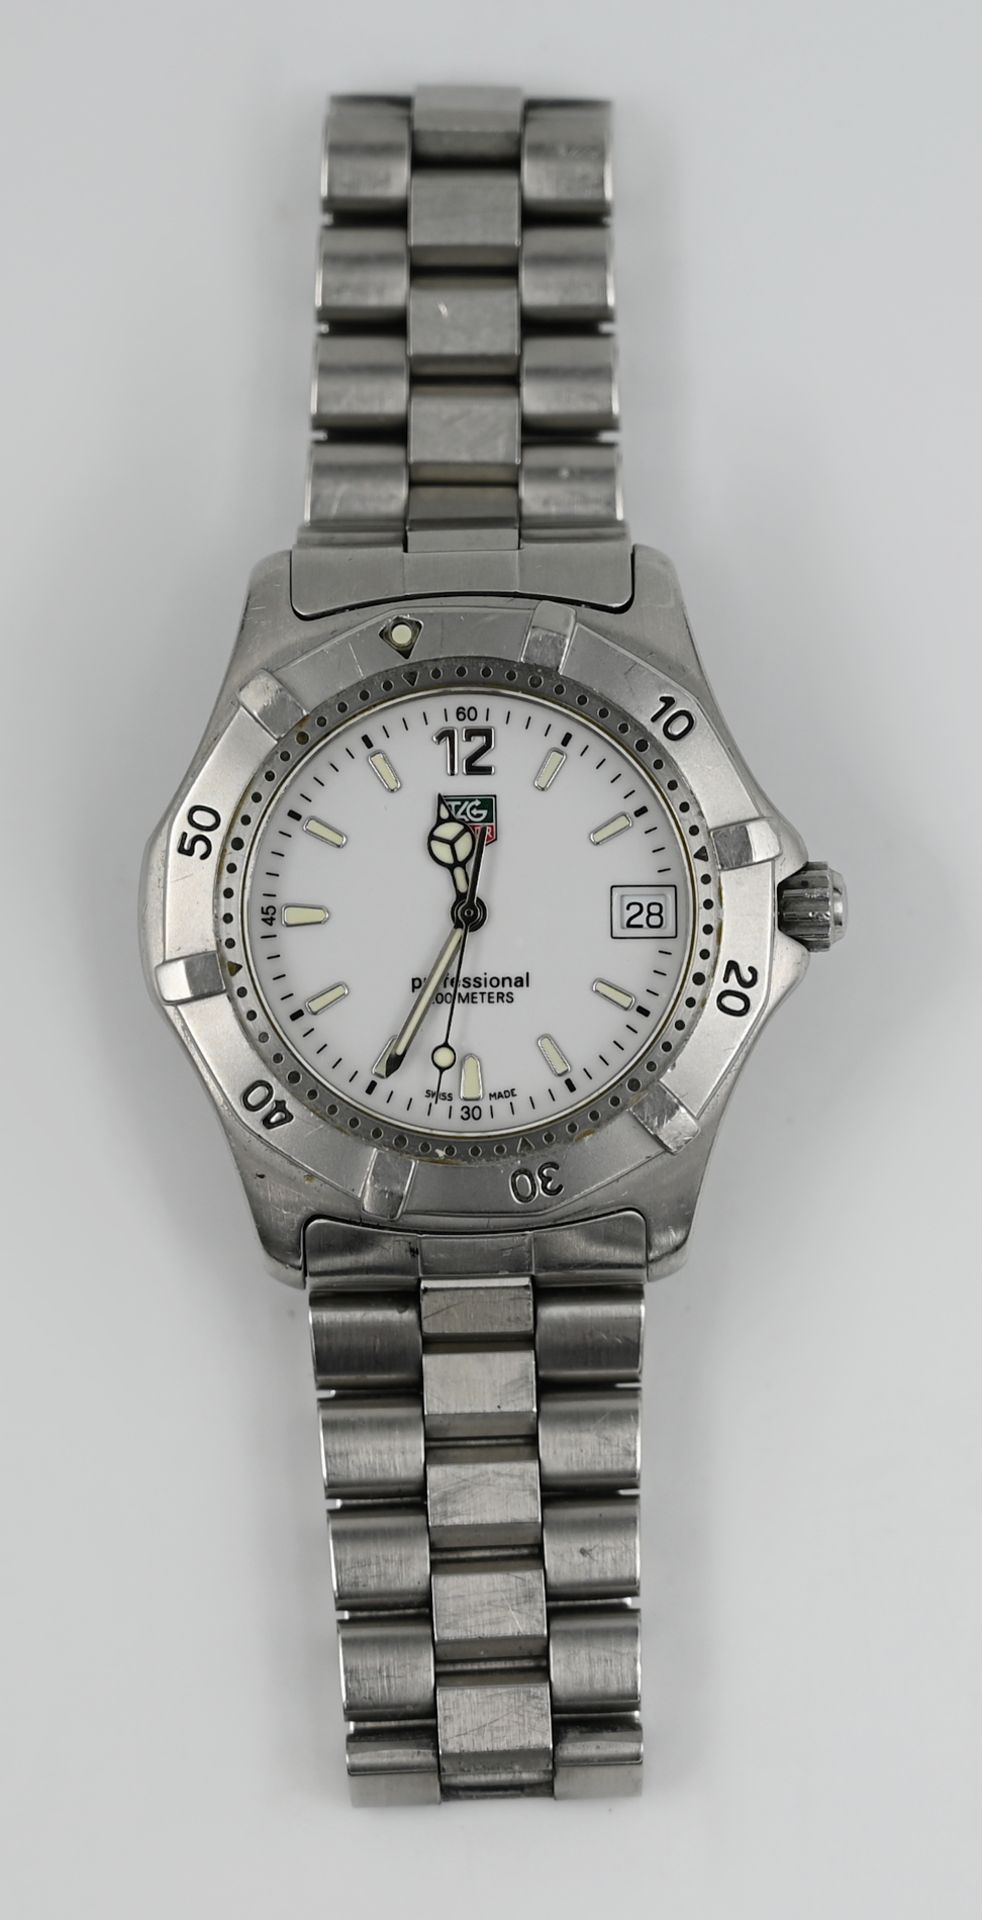 1 Armbanduhr TAG HEUER "Professional", Edelstahl, Datumsanzeige, sichtbare Tsp. 